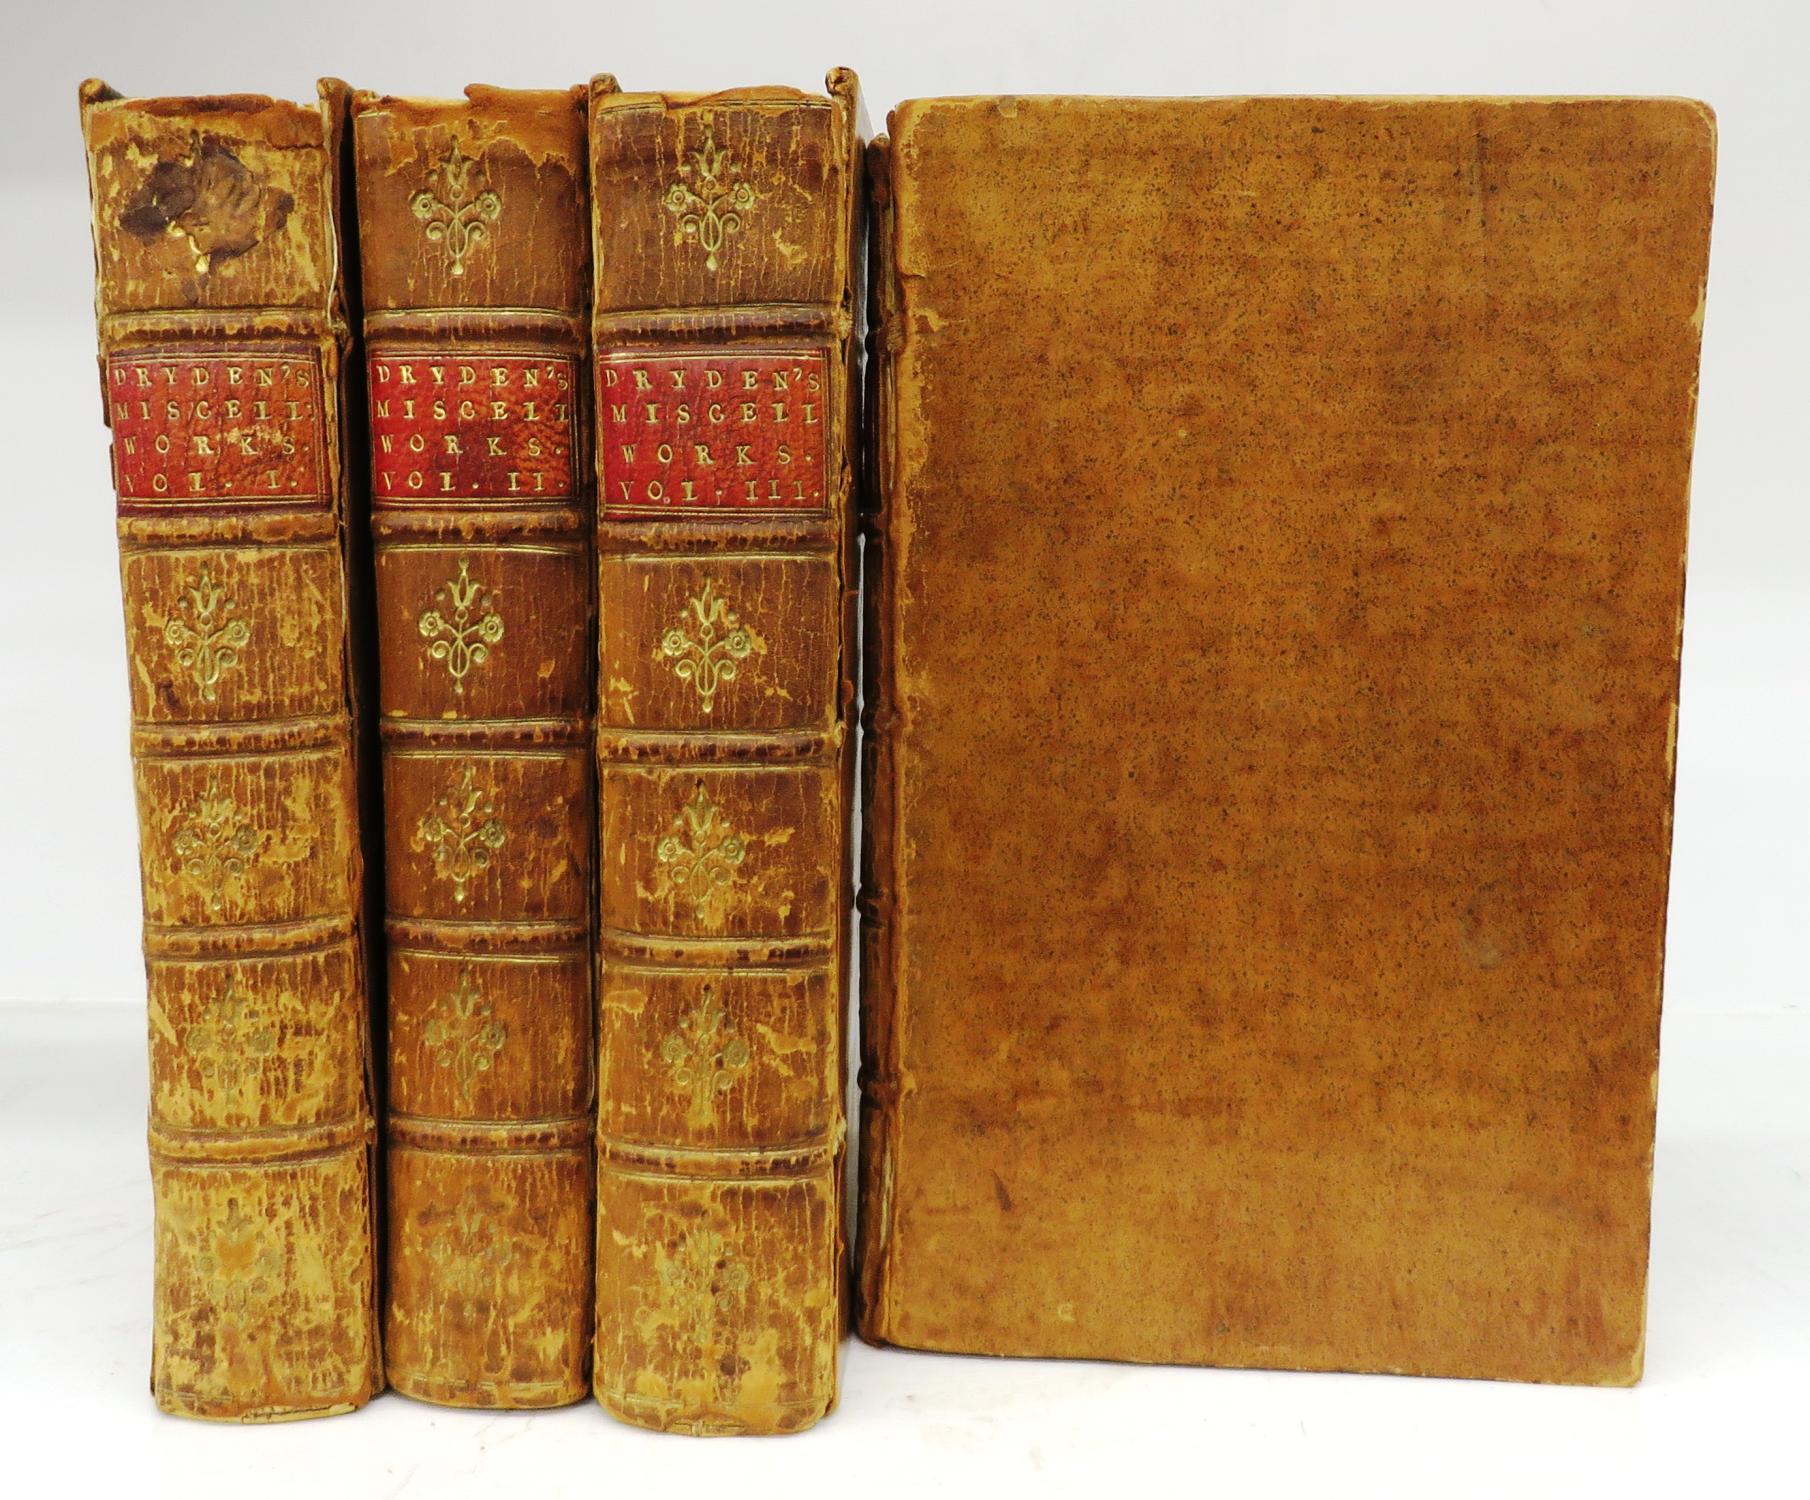 The Miscellaneous Works of John Dryden, Esq - Dryden, John